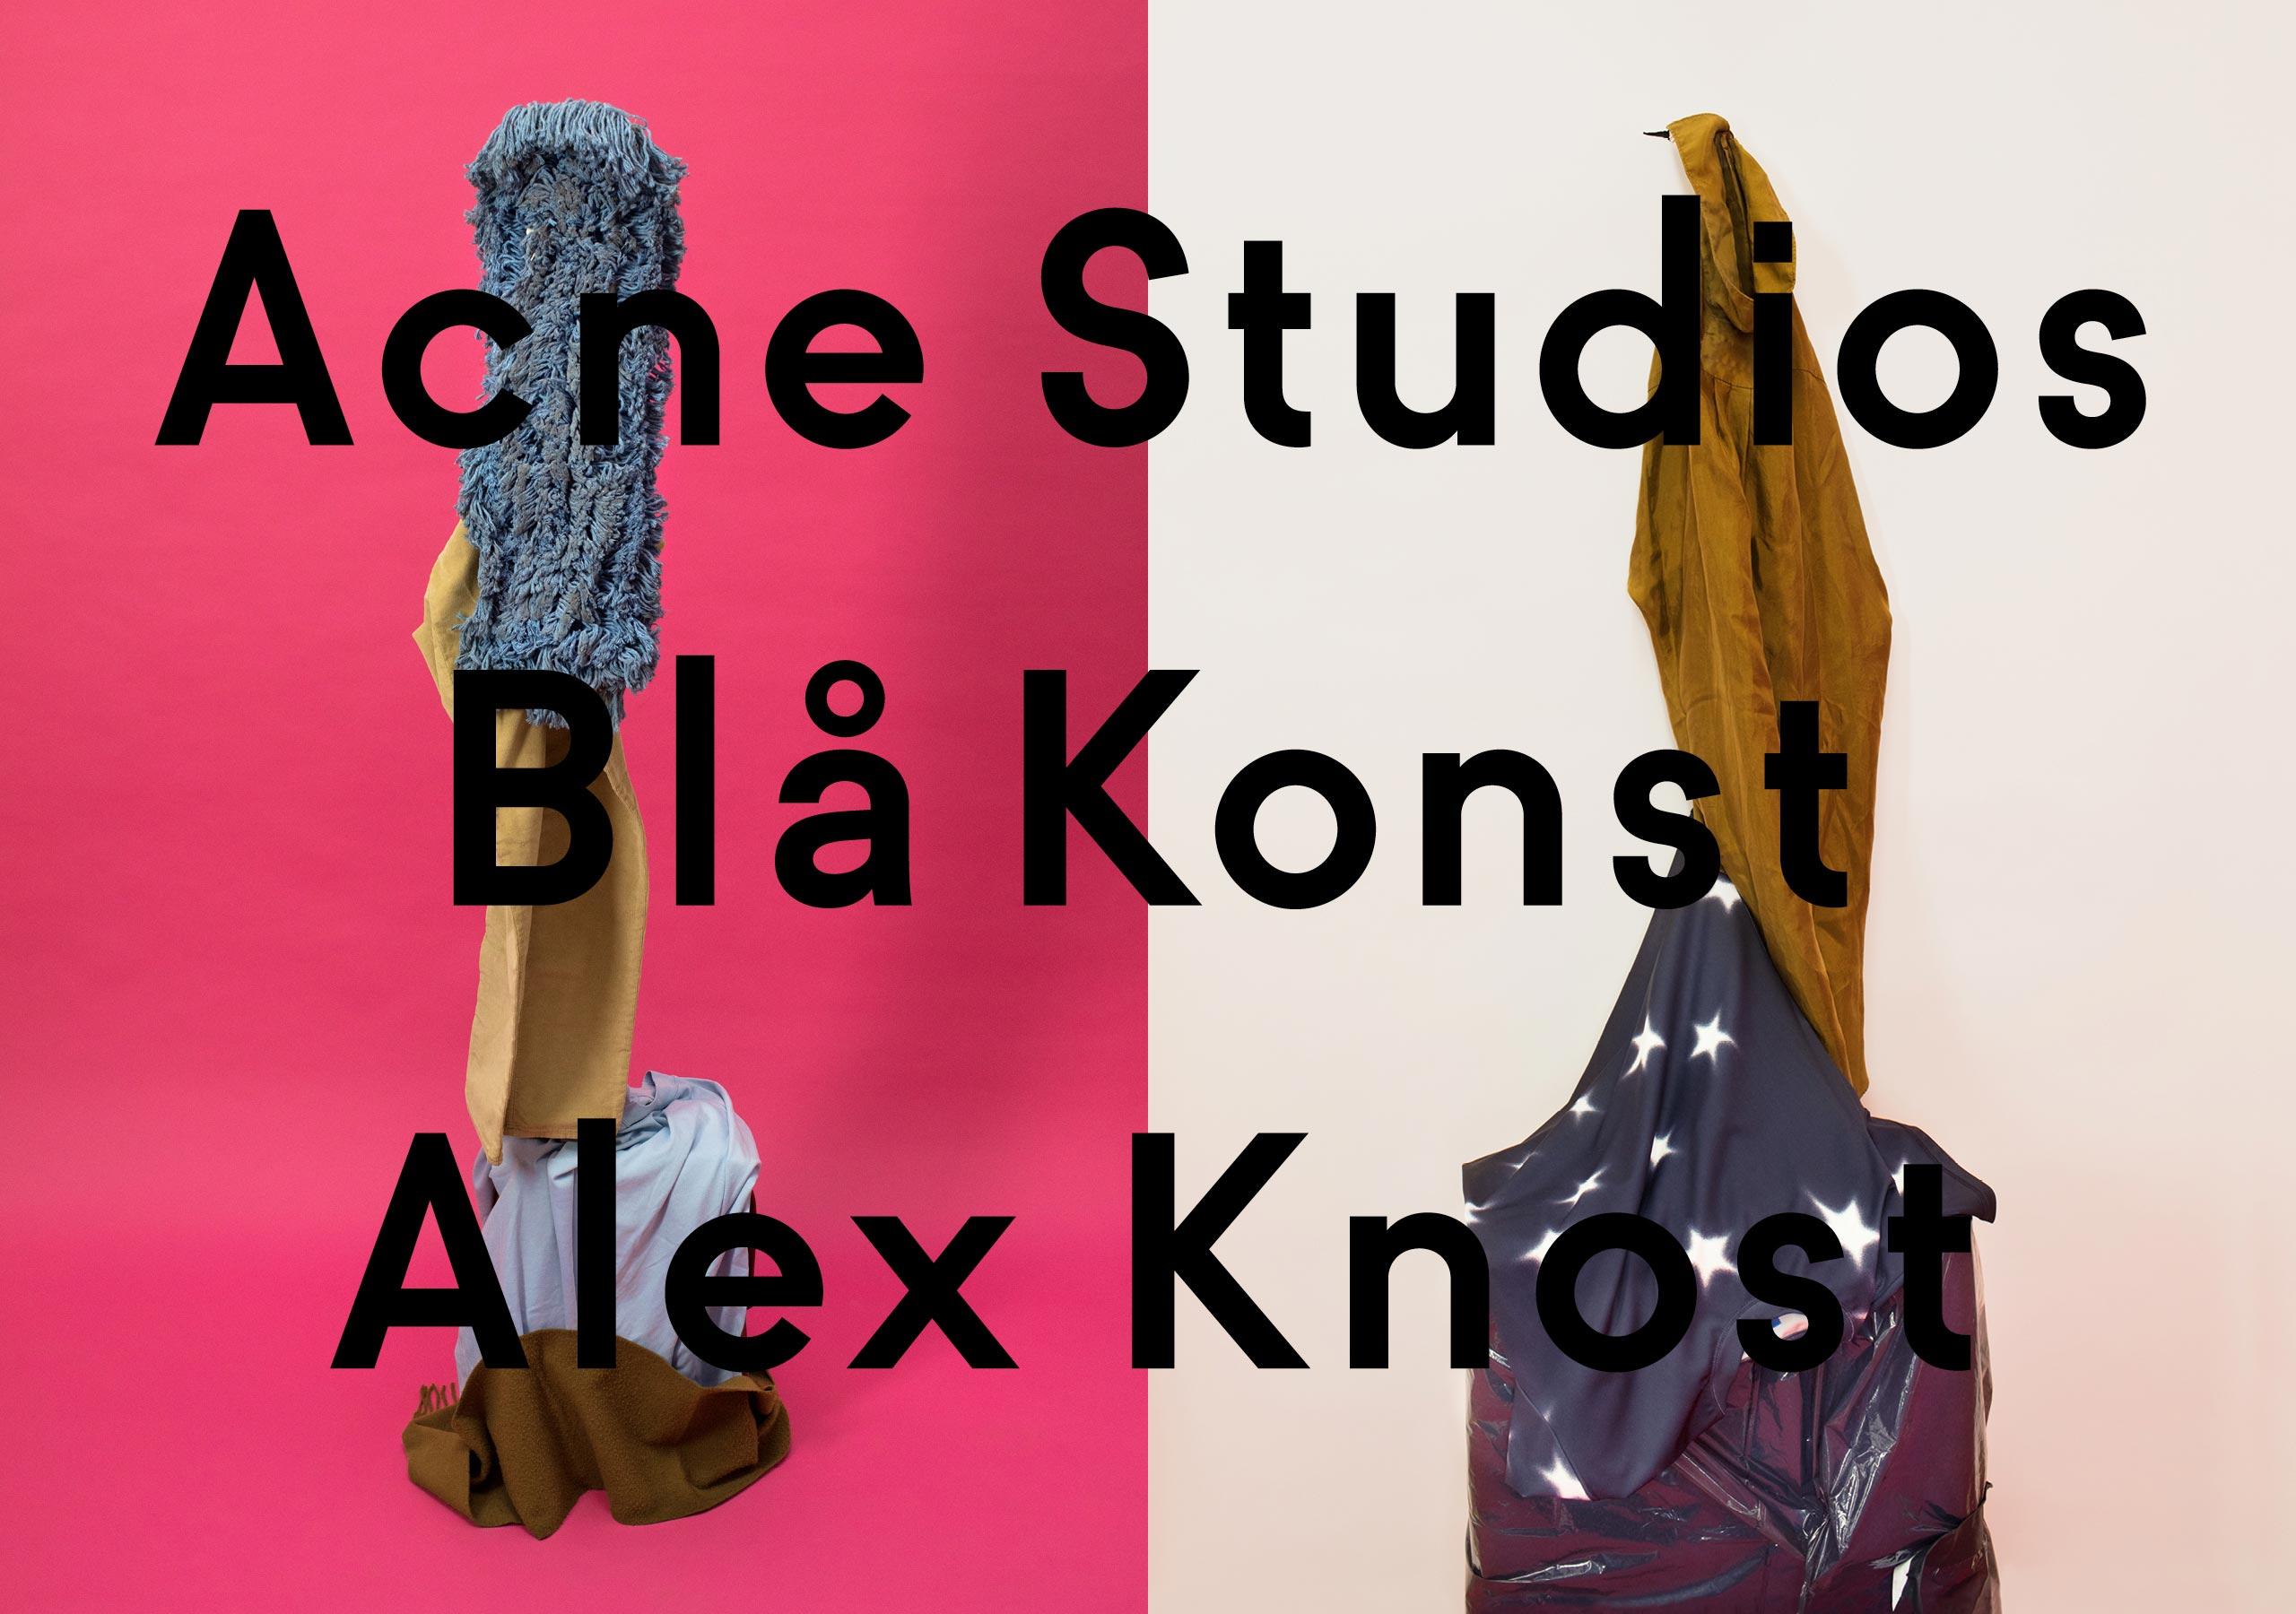 Artist Alex Knost Collaborates with Acne Studios Blå Konst